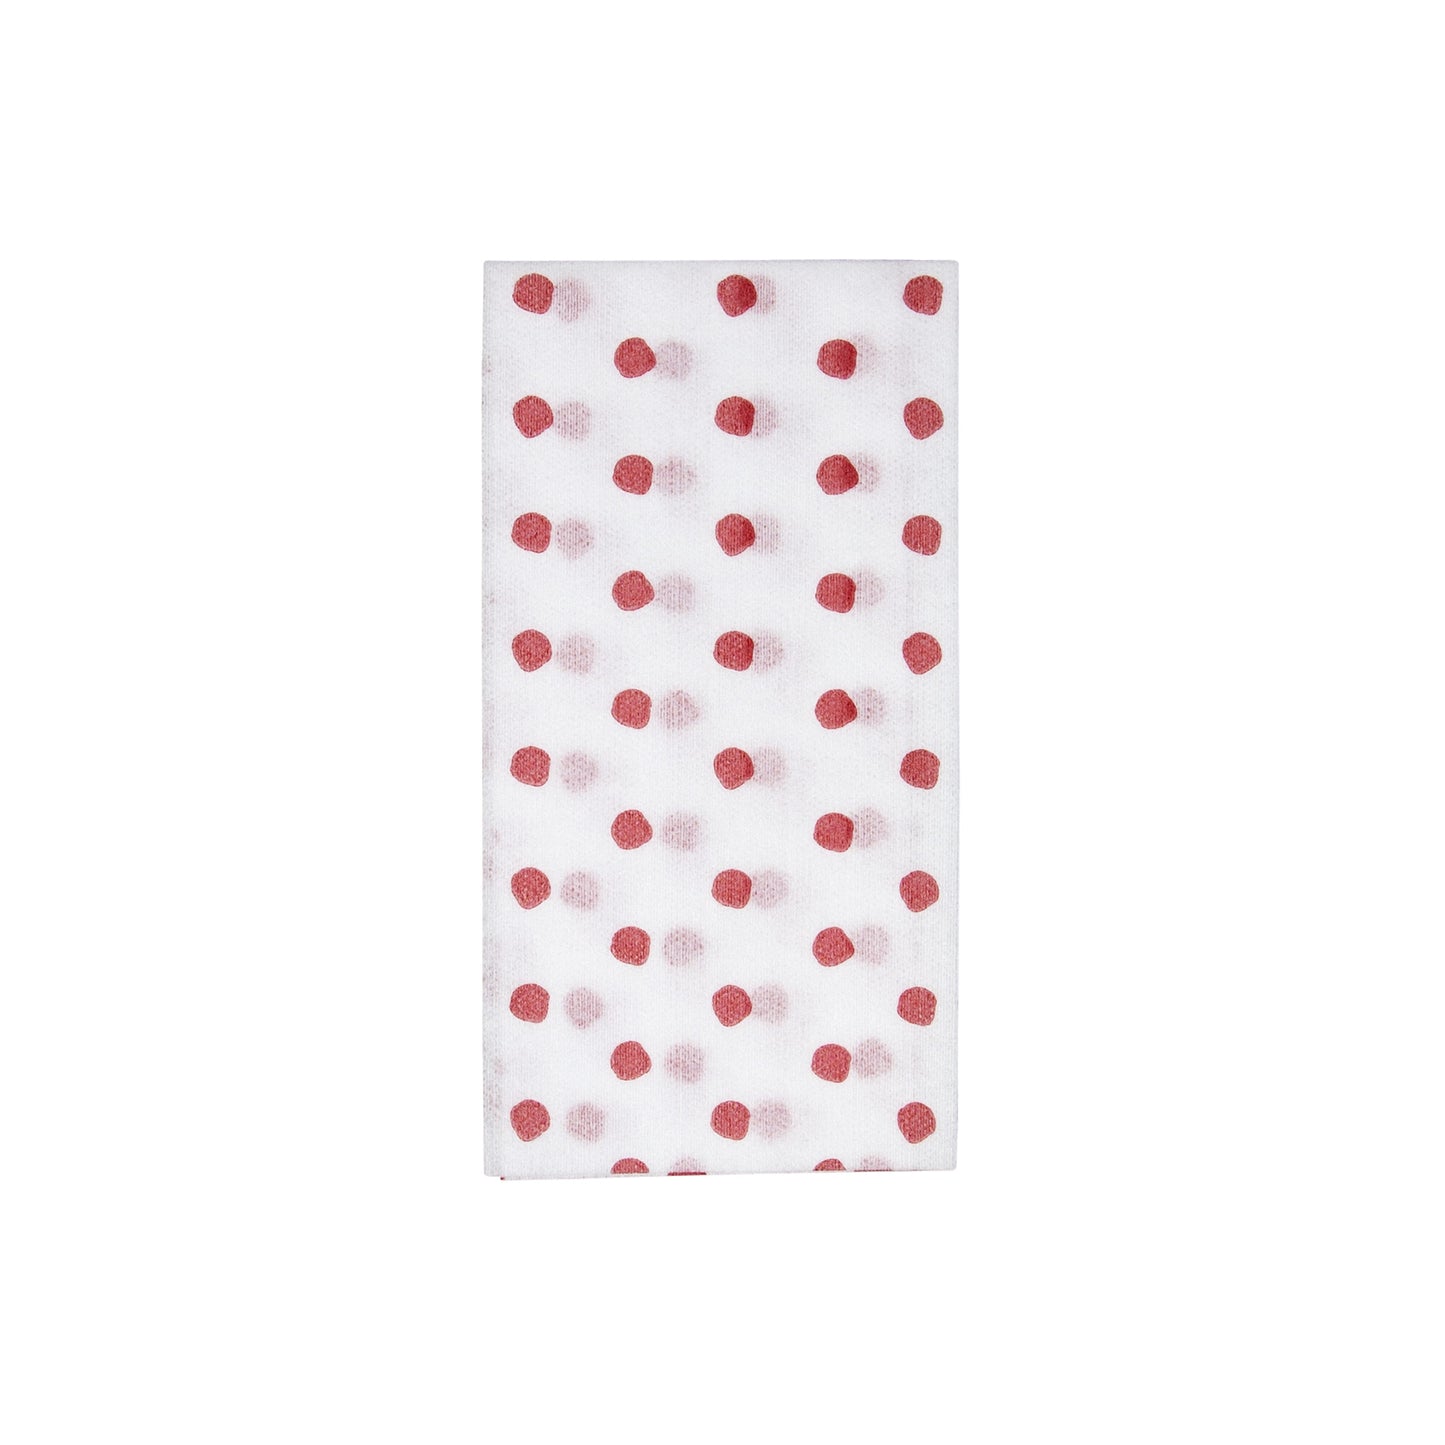 Vietri Papersoft Napkins Dot Red Guest Towels, 50-Pack Spunlace Paper Towels